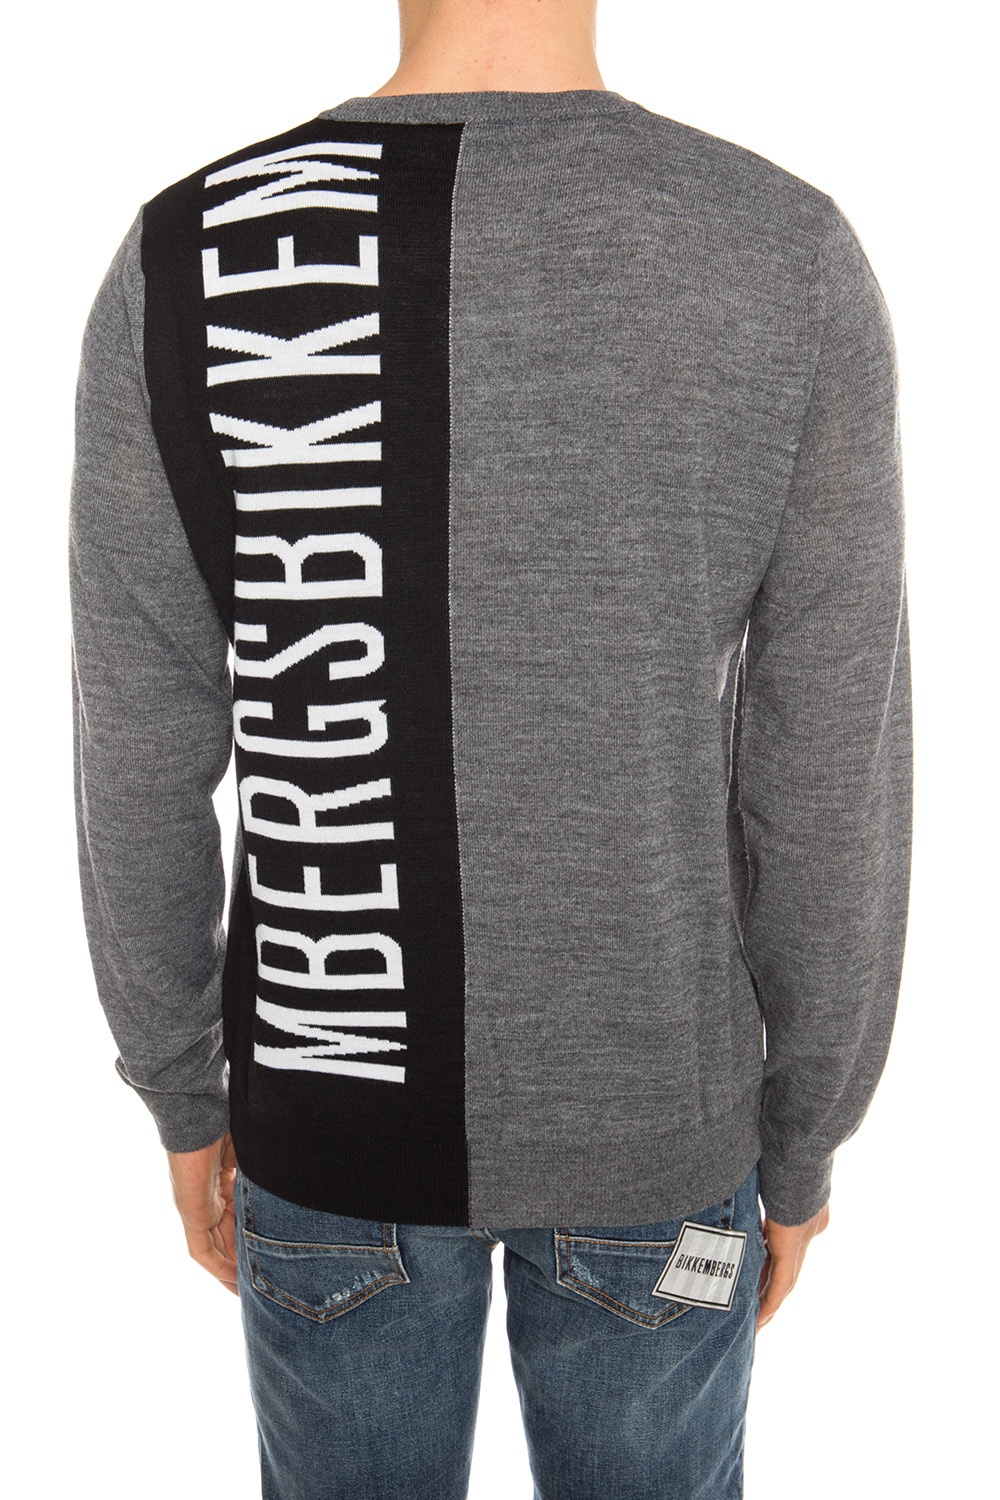 Christian Ligatie Krijger Grey Sweater with embroidered logo Dirk Bikkembergs - Vitkac Australia